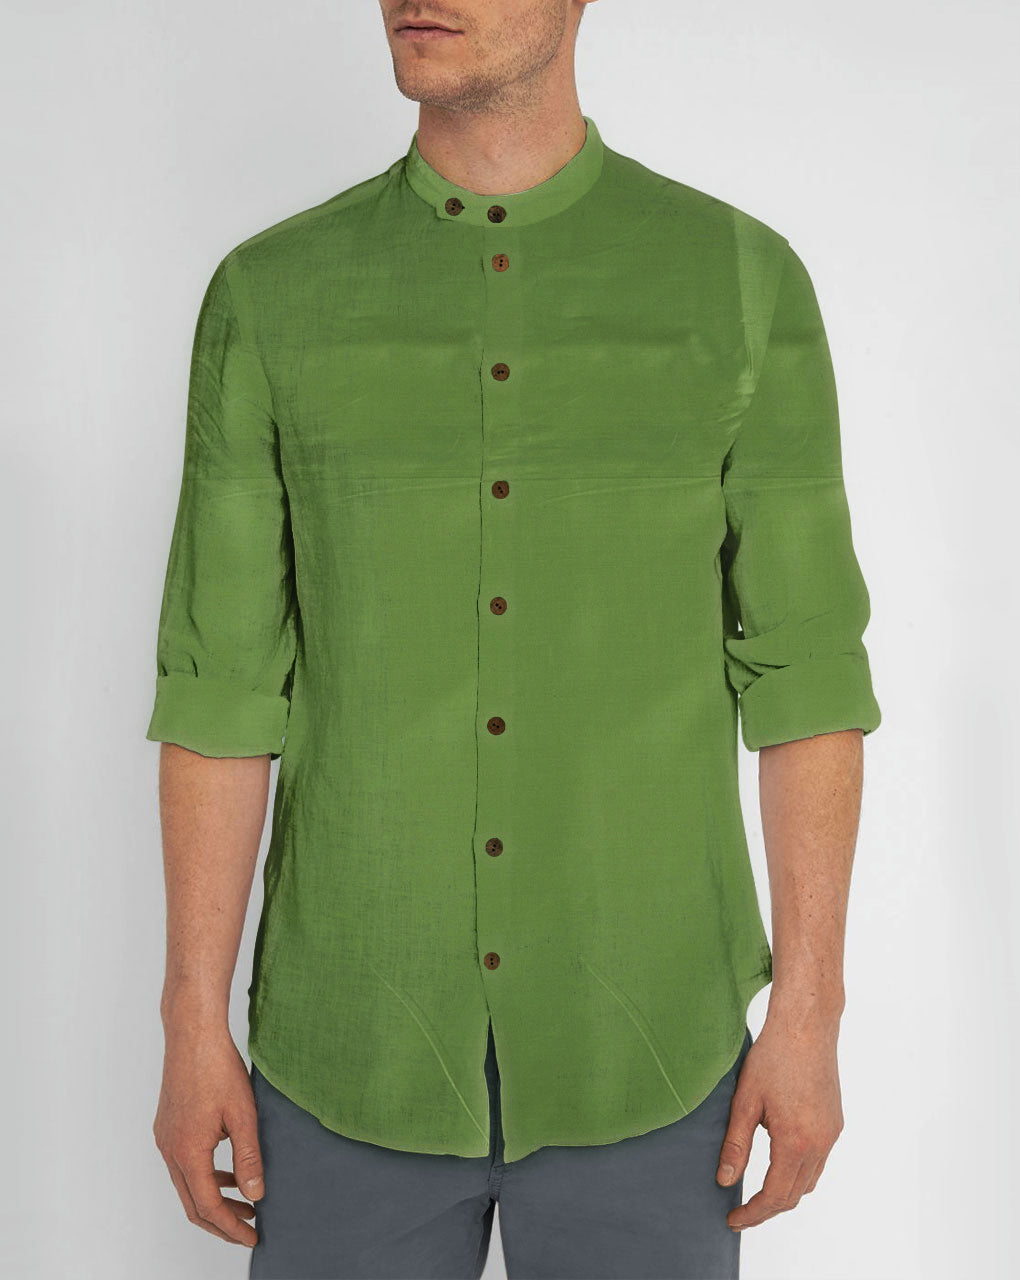 Green Plain Glazed Cotton Fabric - Fabriclore.com